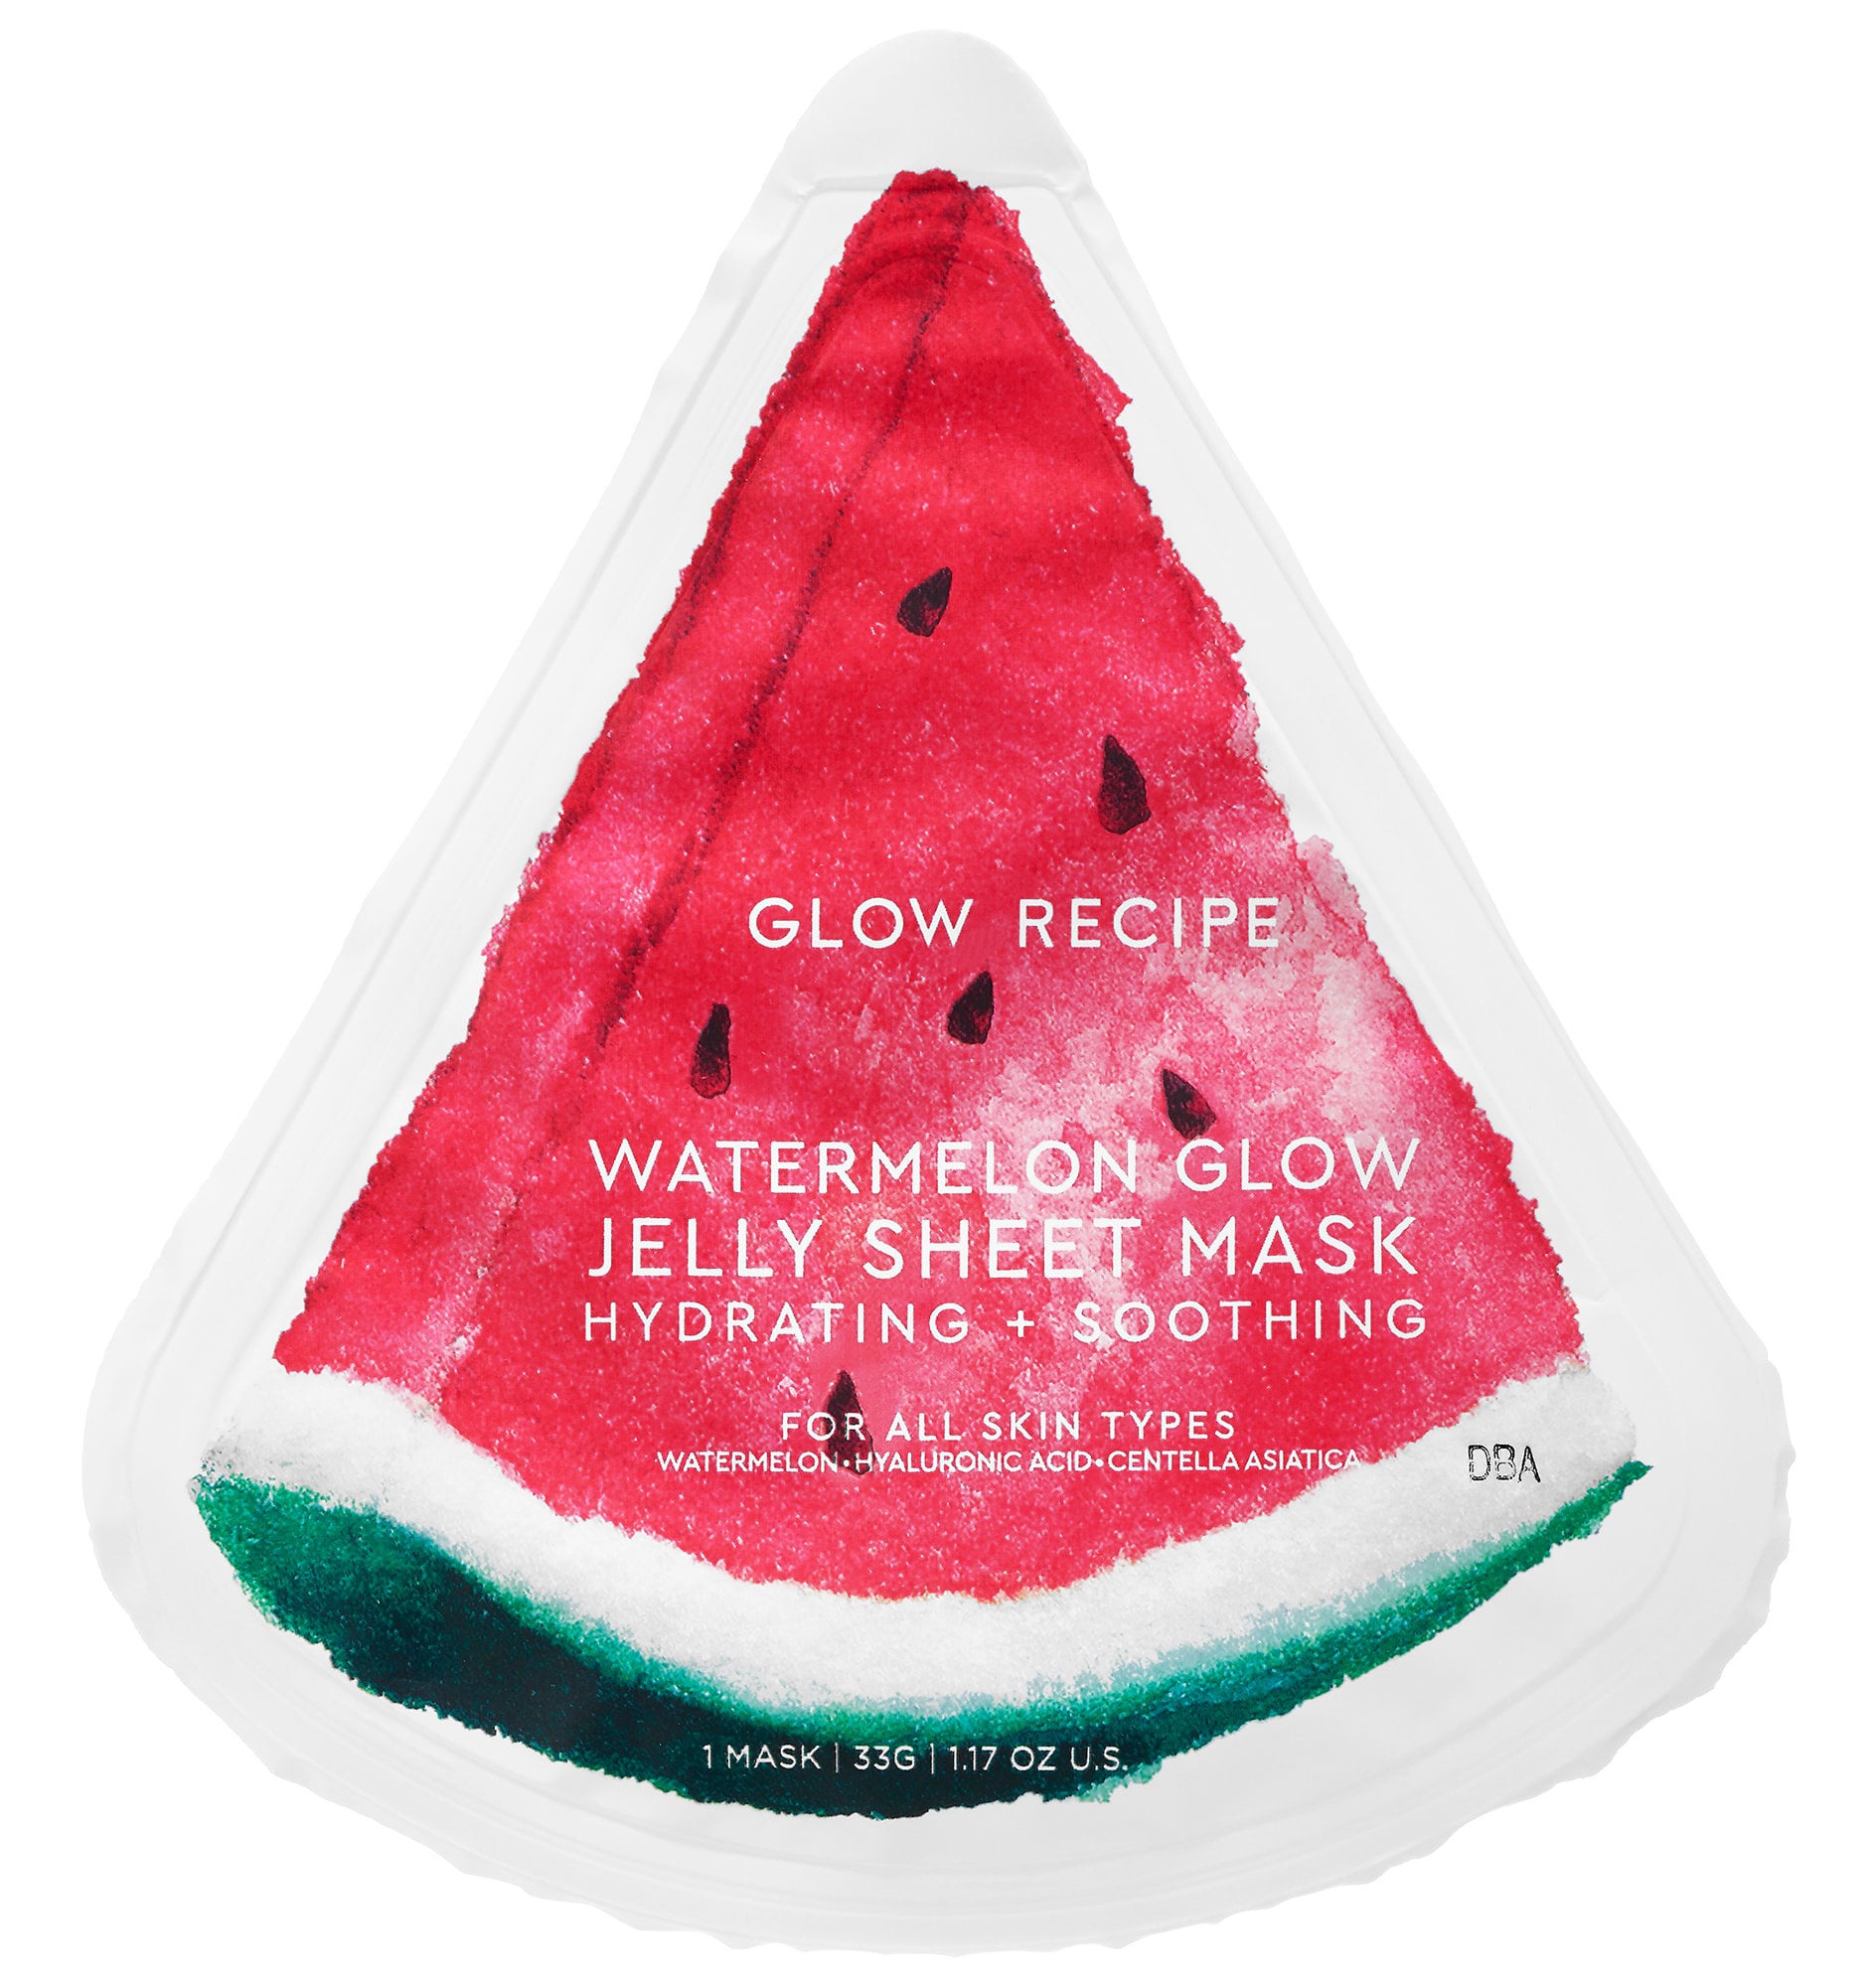 Glow Recipe Watermelon Glow Jelly Sheet Mask